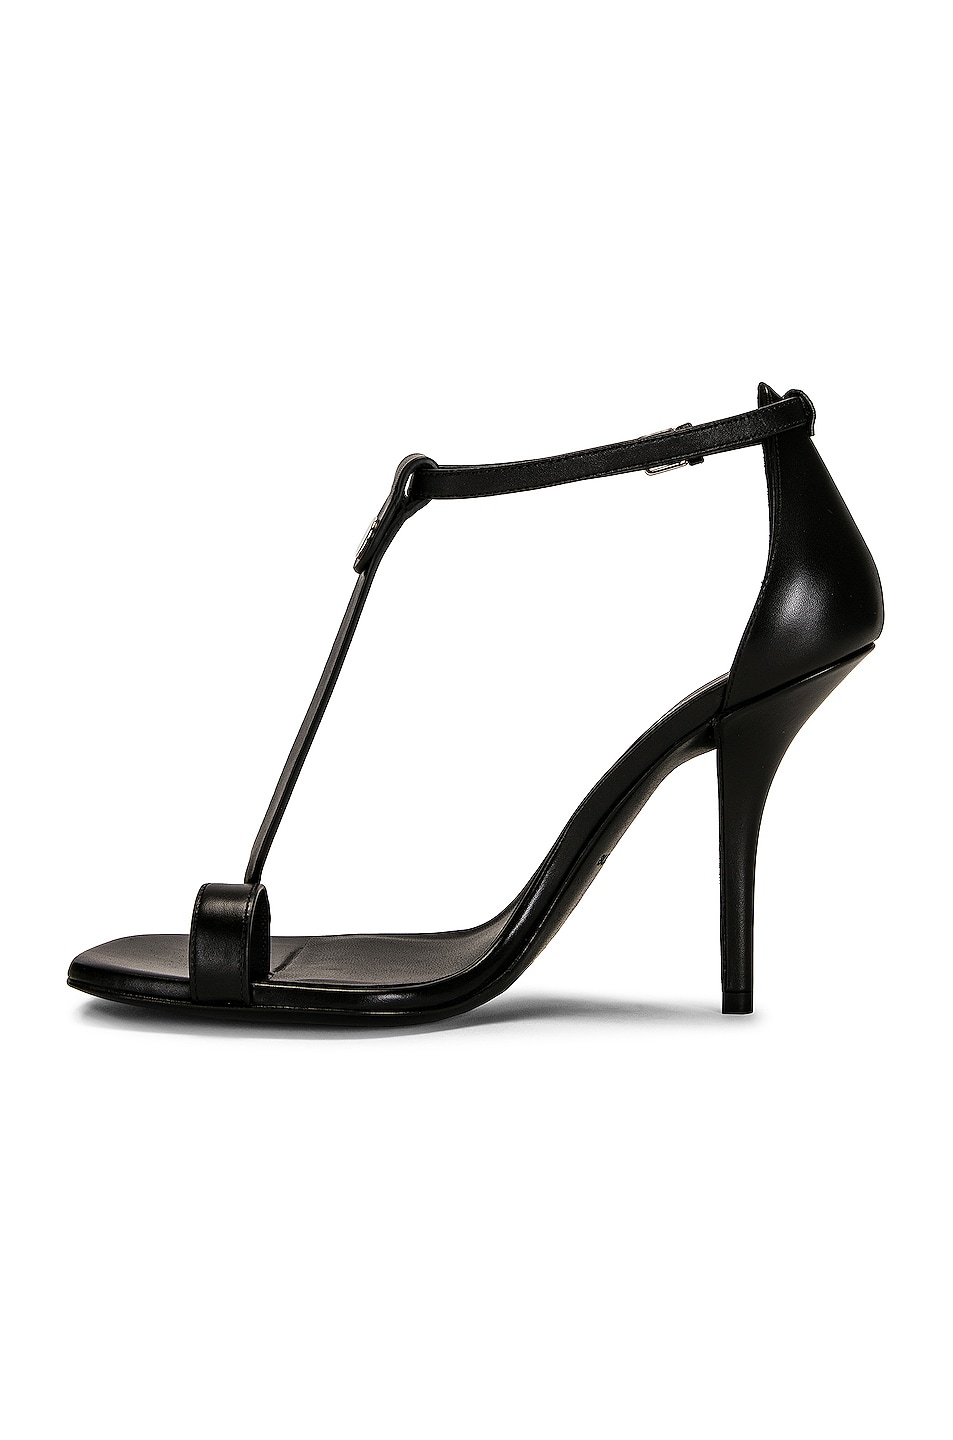 Burberry Stefanie Sandals in Black | FWRD